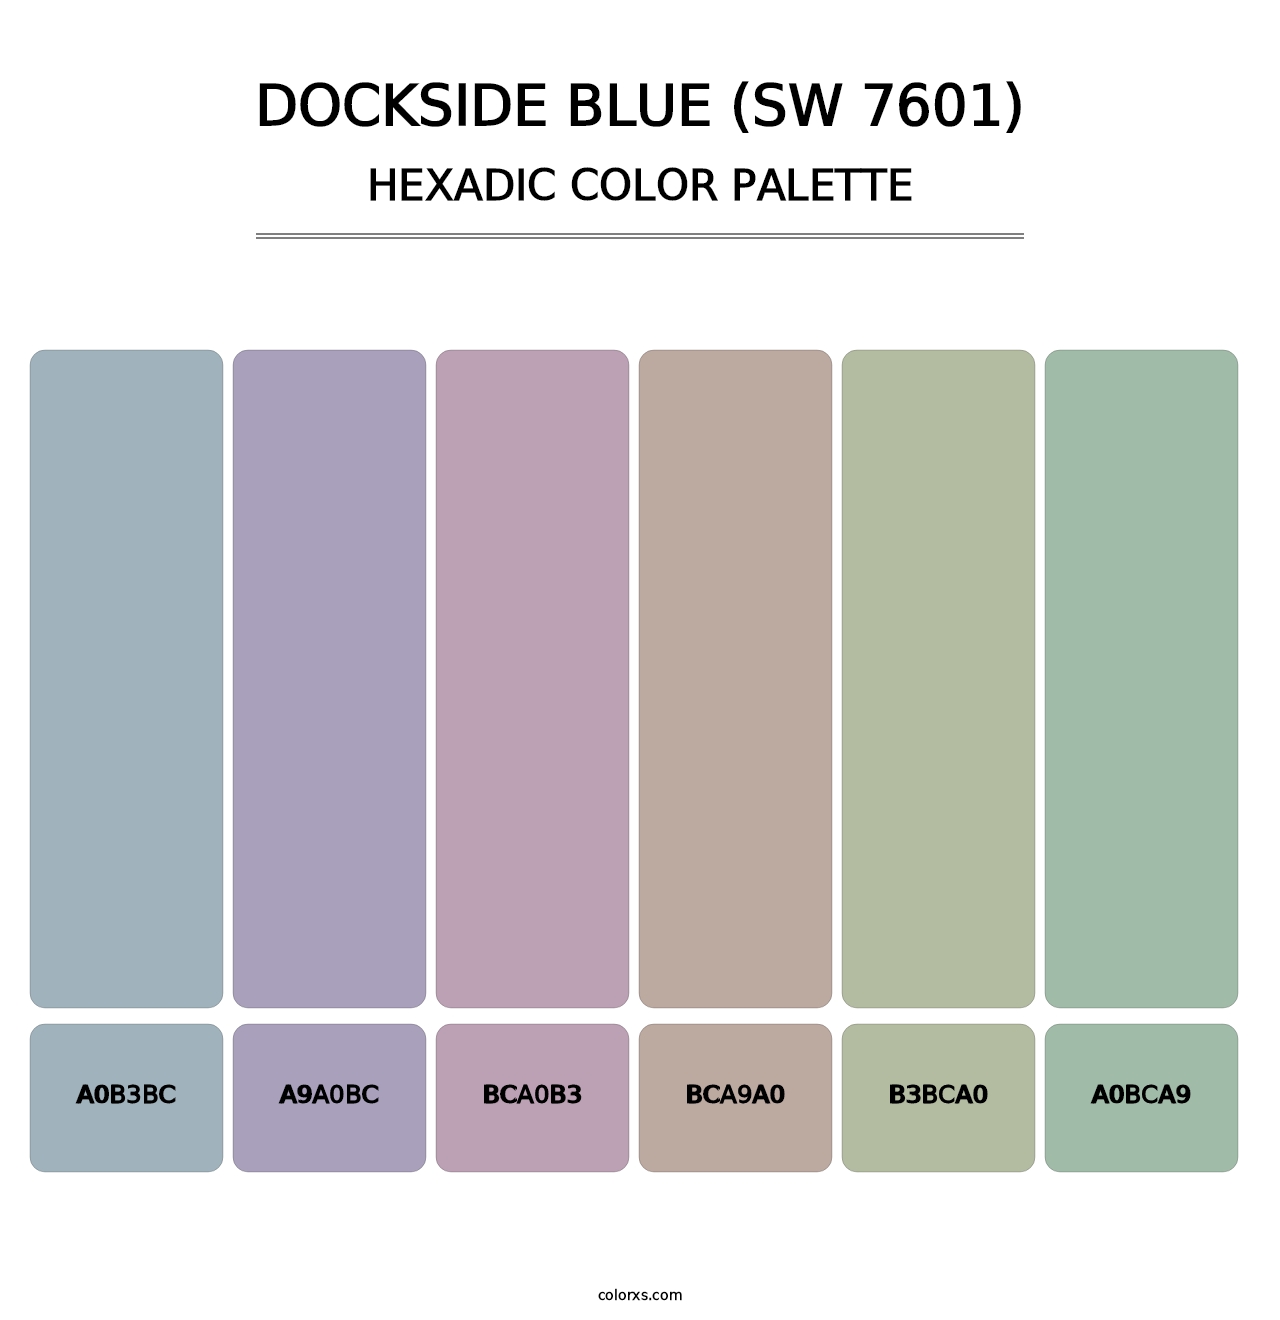 Dockside Blue (SW 7601) - Hexadic Color Palette